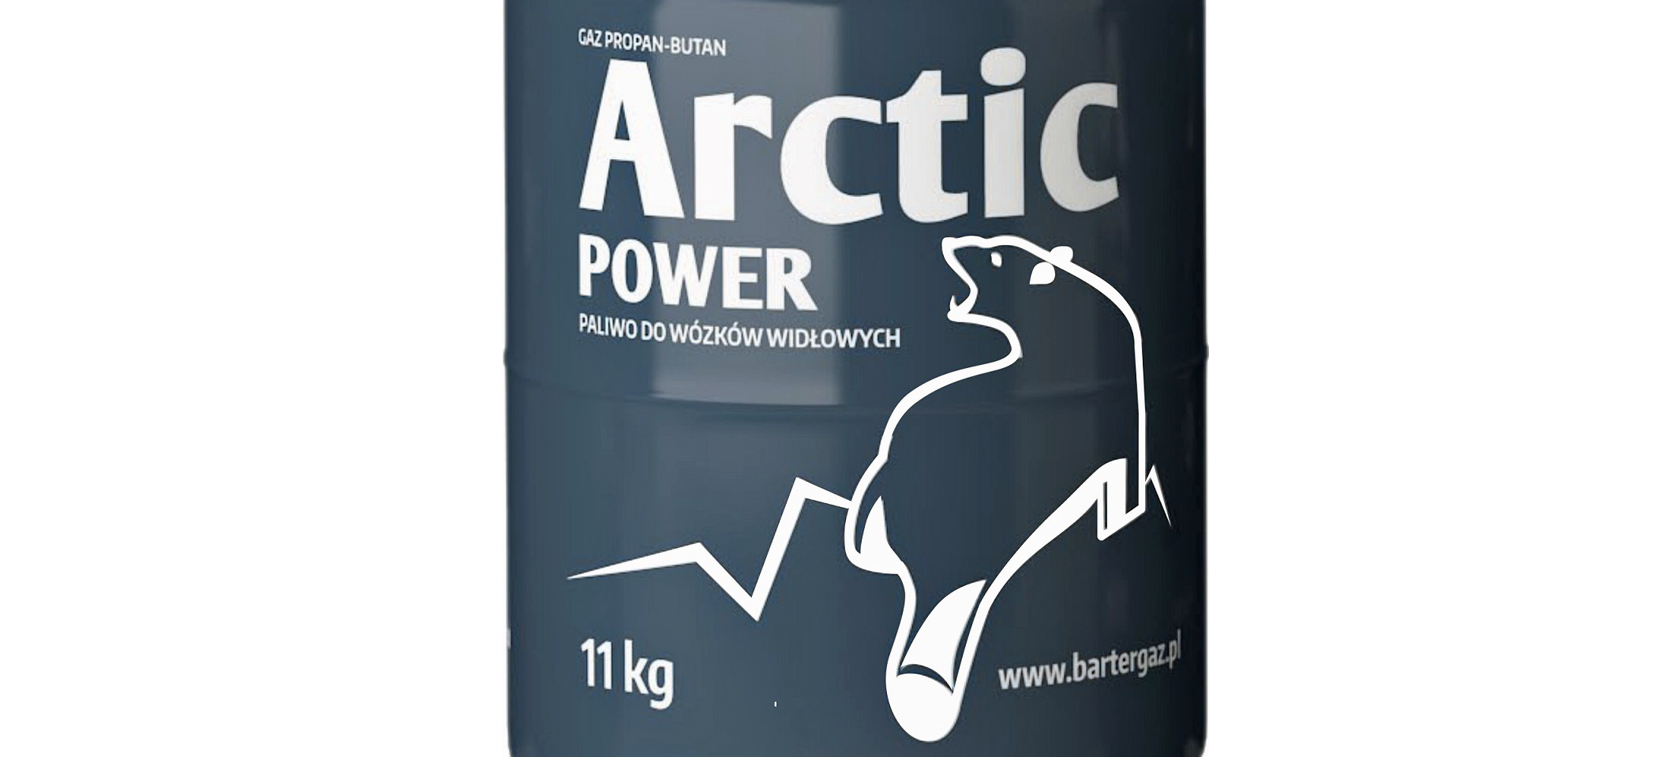 Barter SA wprowadza na rynek nowe paliwo "Arctic Power"